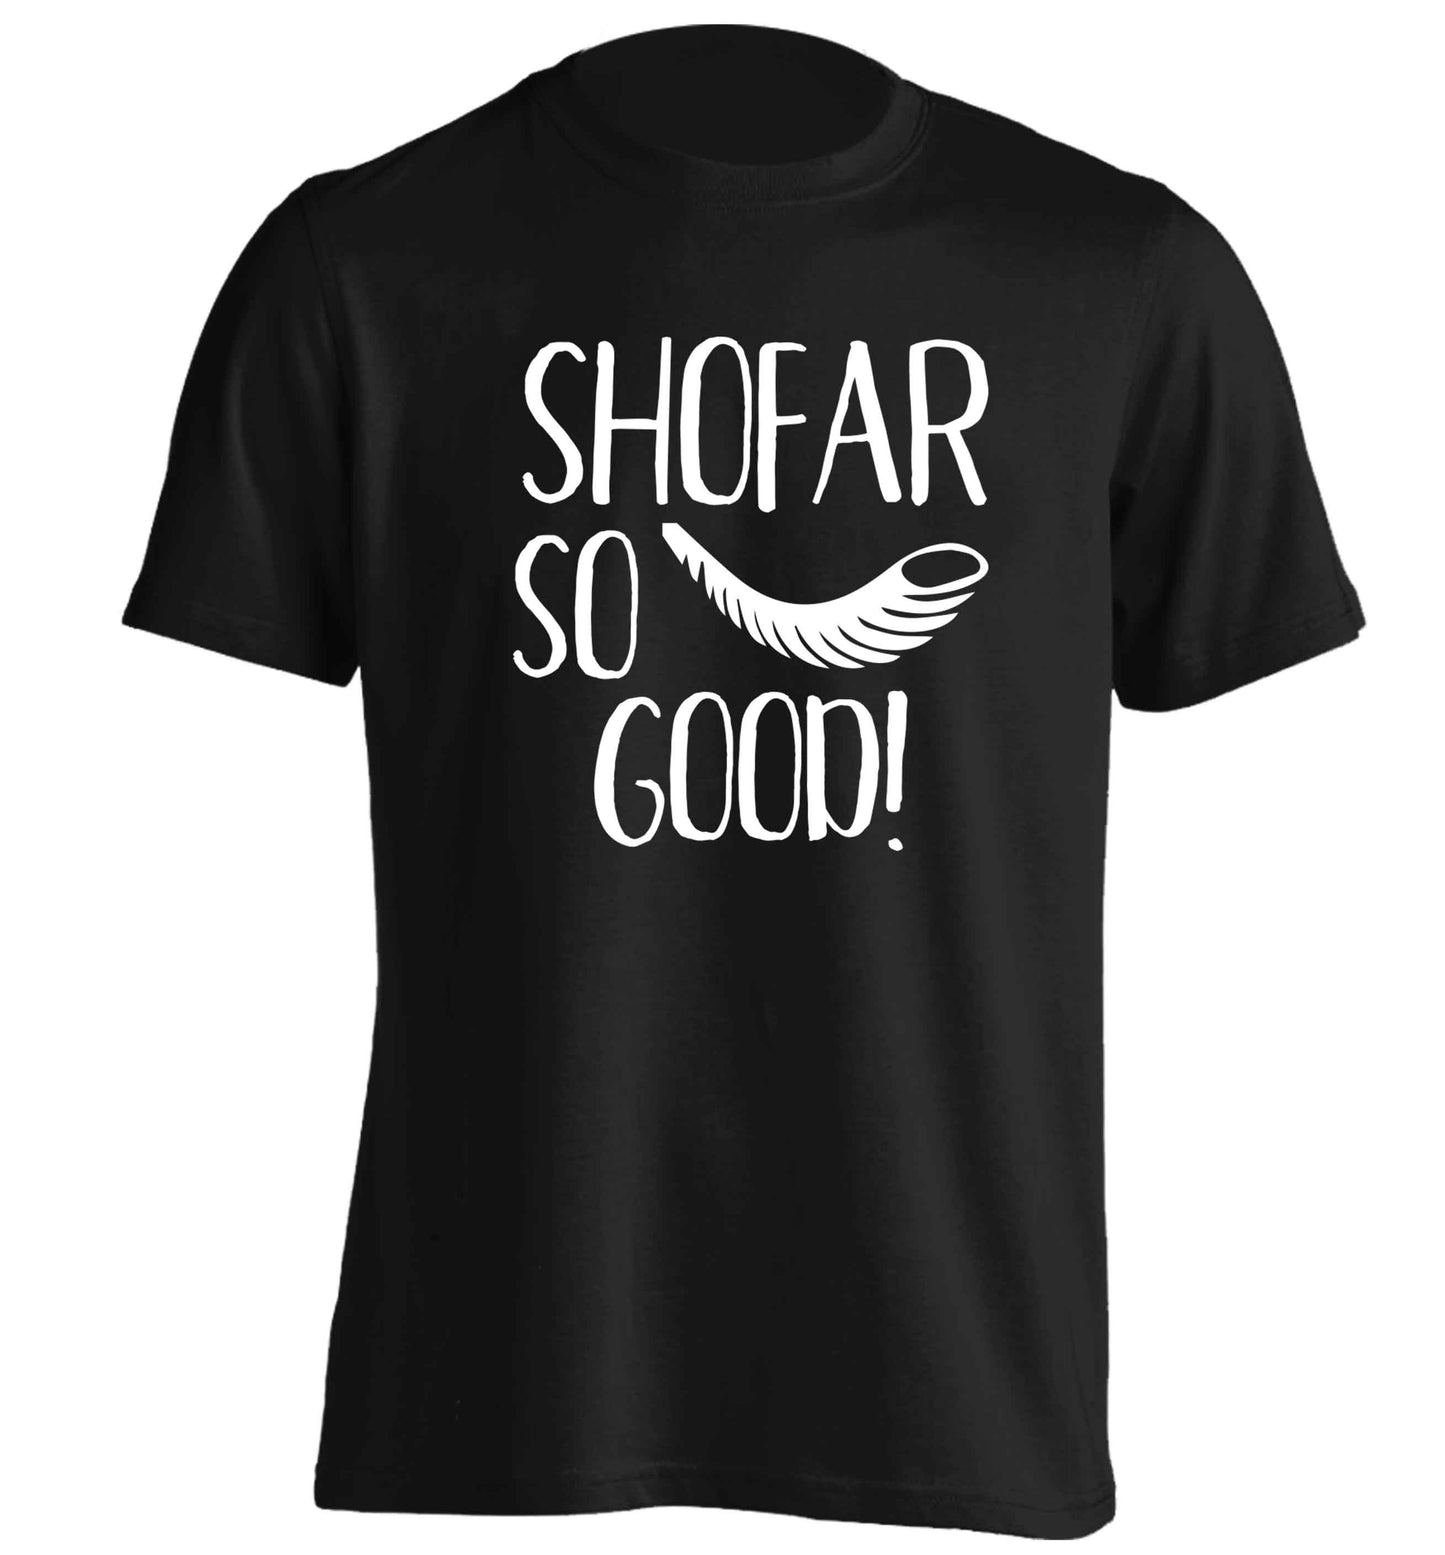 Shofar so good! adults unisex black Tshirt 2XL